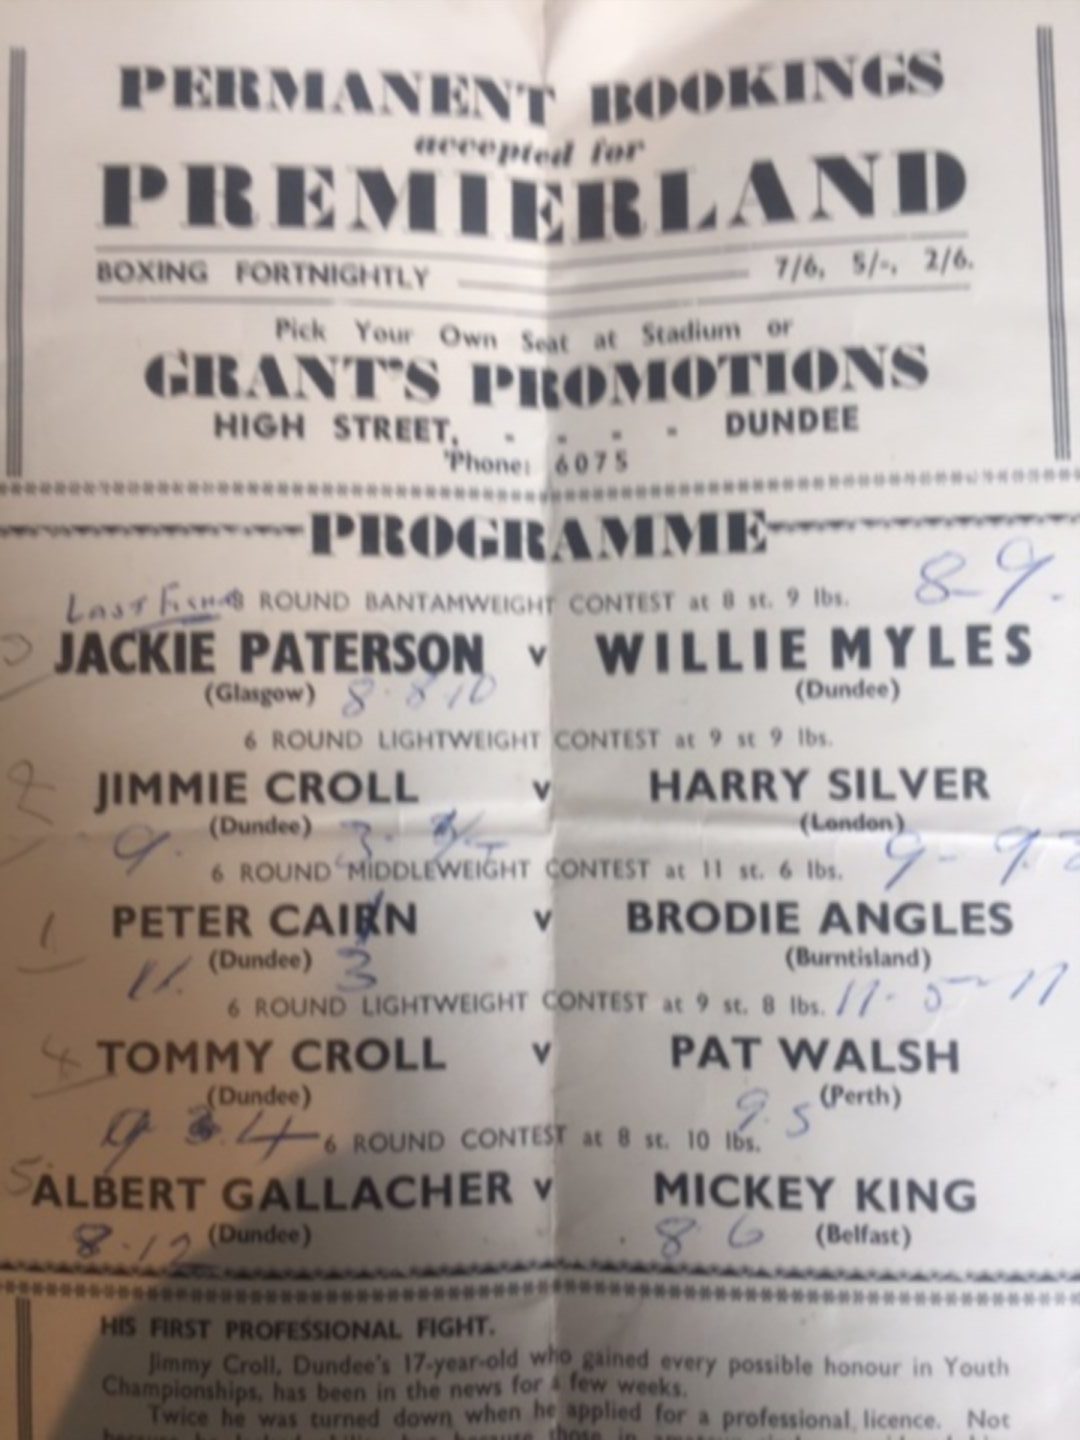 Premierland boxing programme.